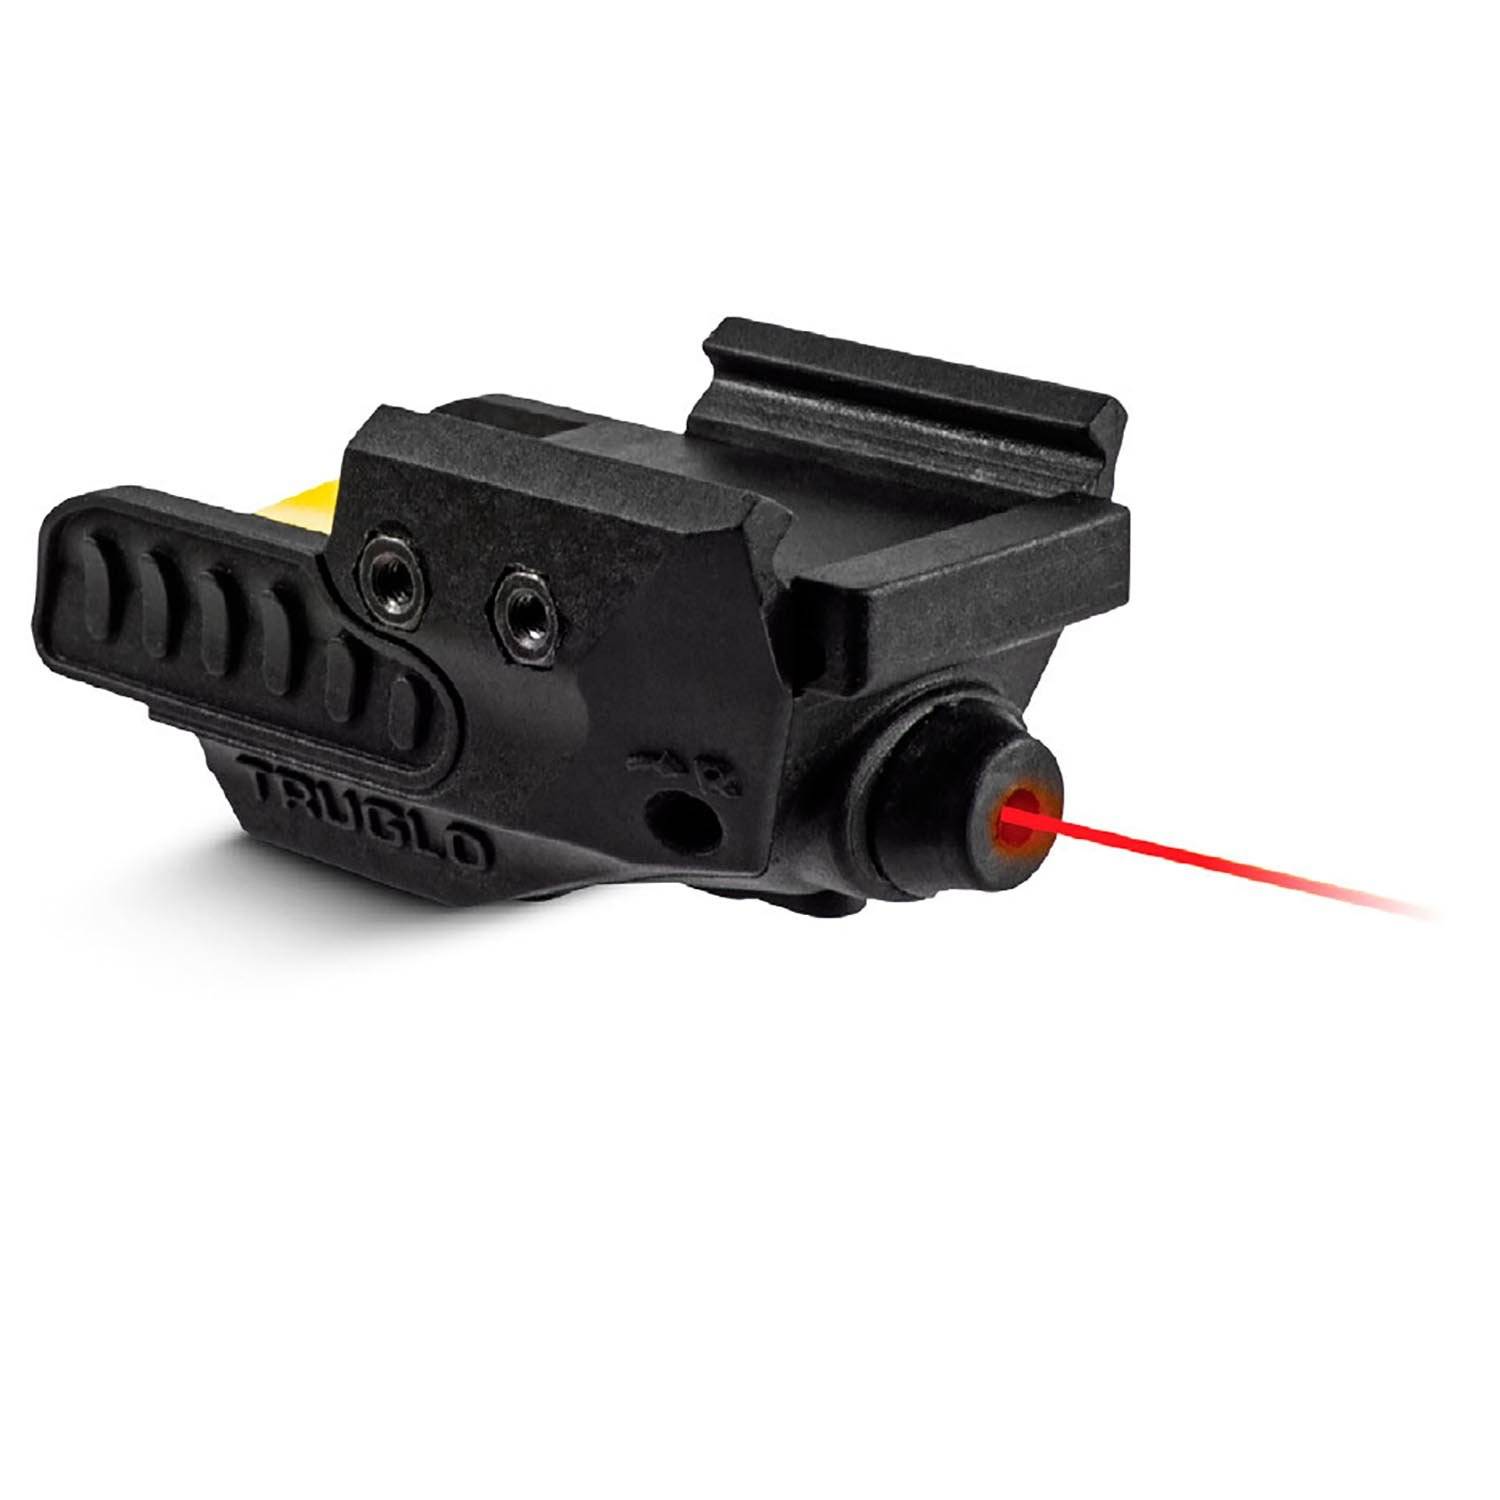 Tru Glo Sight-Line Red Laser